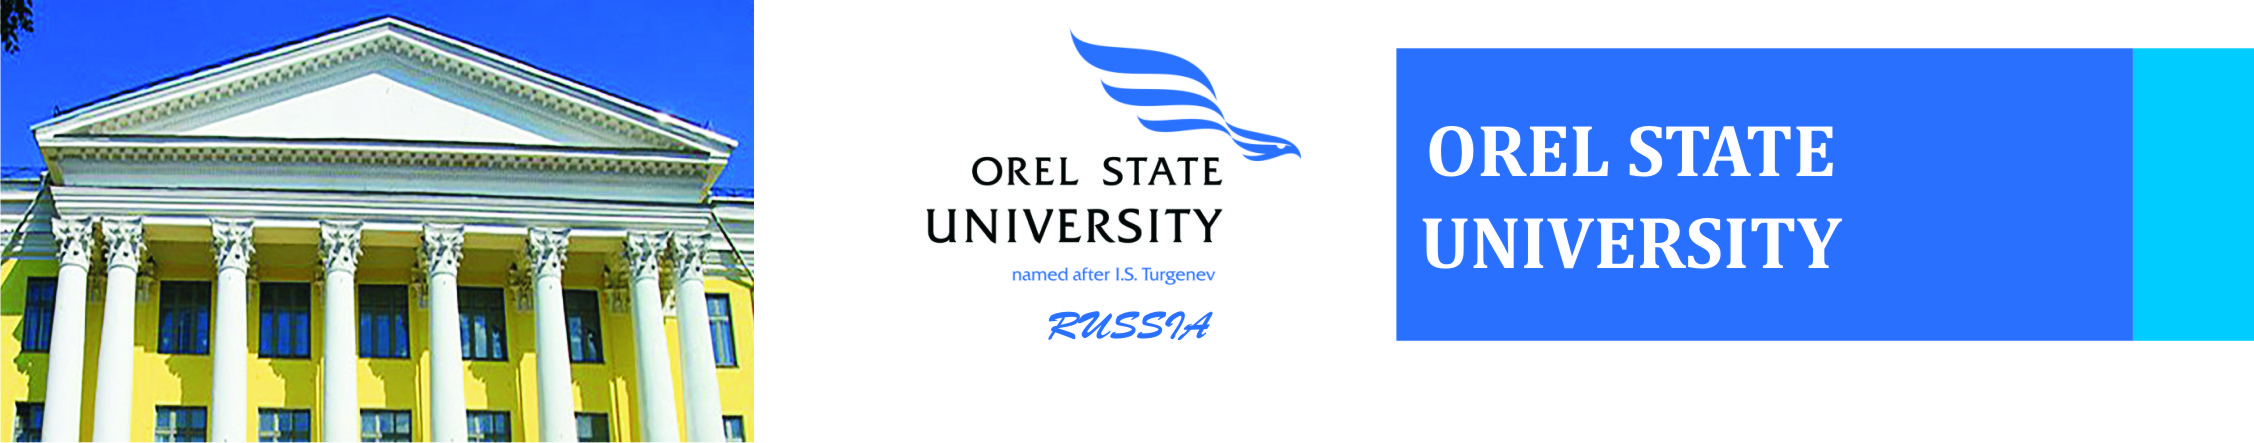 orel state university